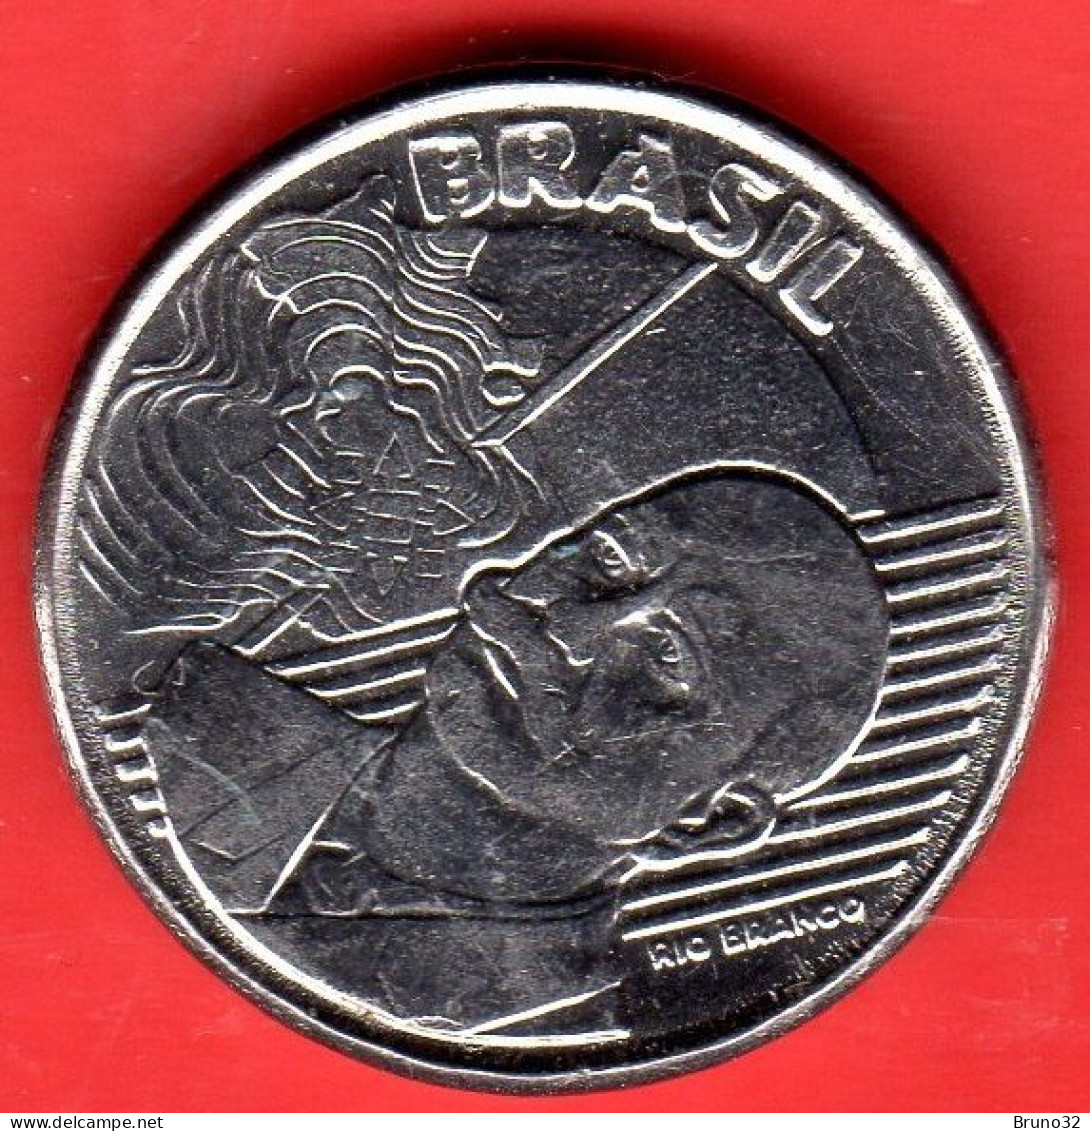 BRASILE - BRASIL - 2002 - 50 Centavos - QFDC/aUNC - Come Da Foto - Brésil